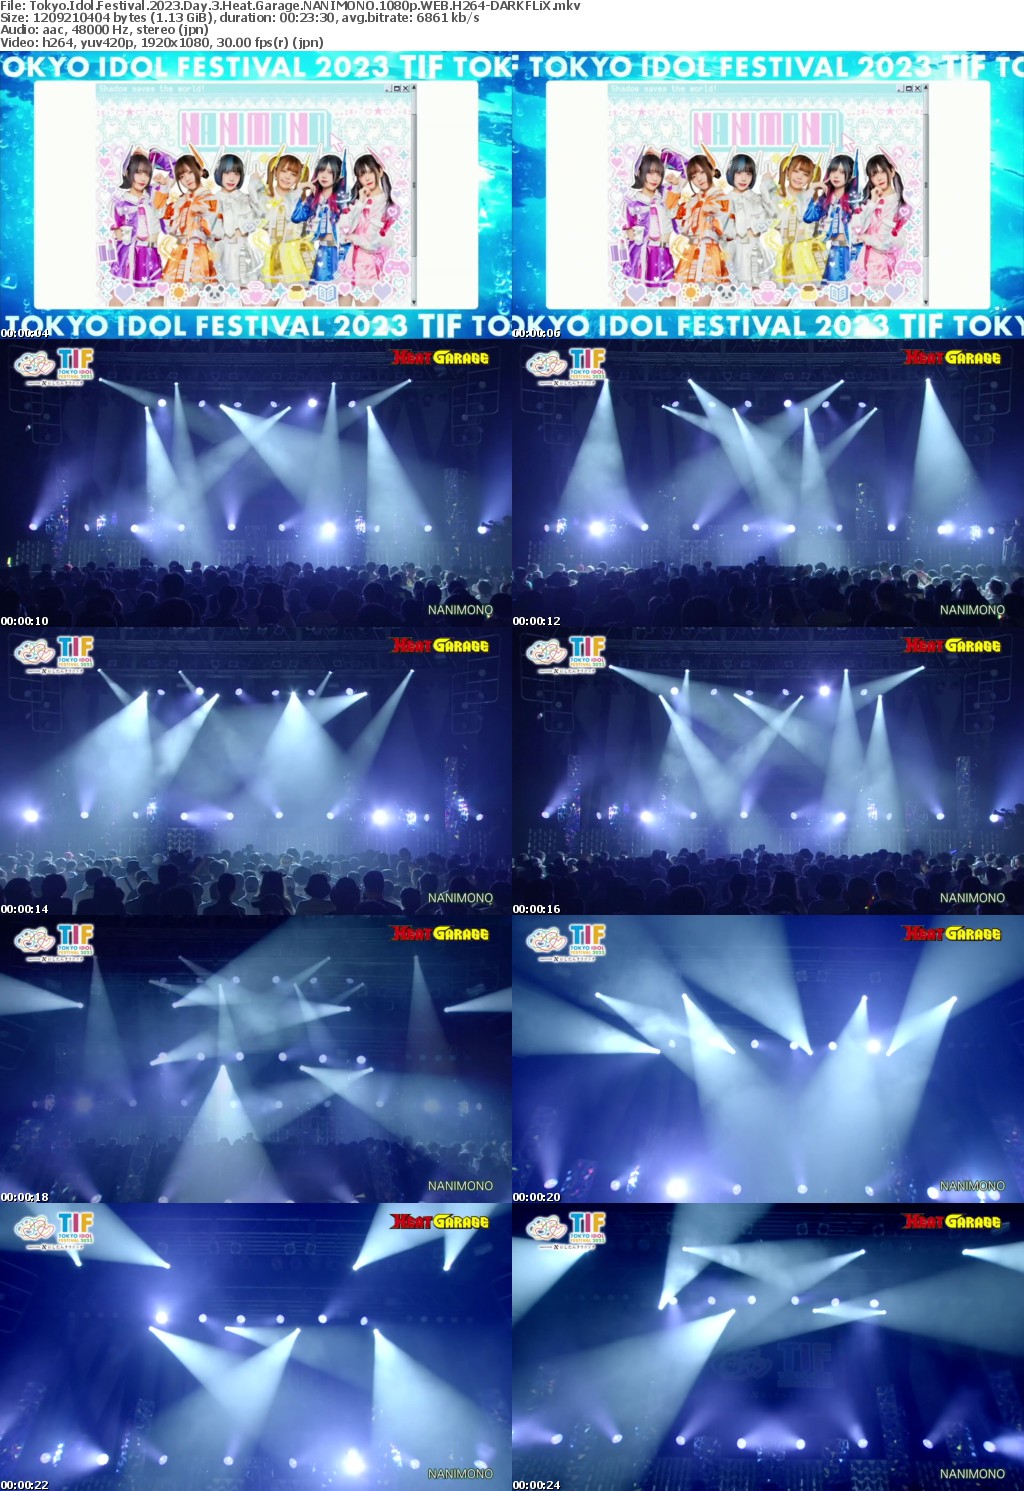 Tokyo Idol Festival 2023 Day 3 Heat Garage NANIMONO 1080p WEB H264-DARKFLiX